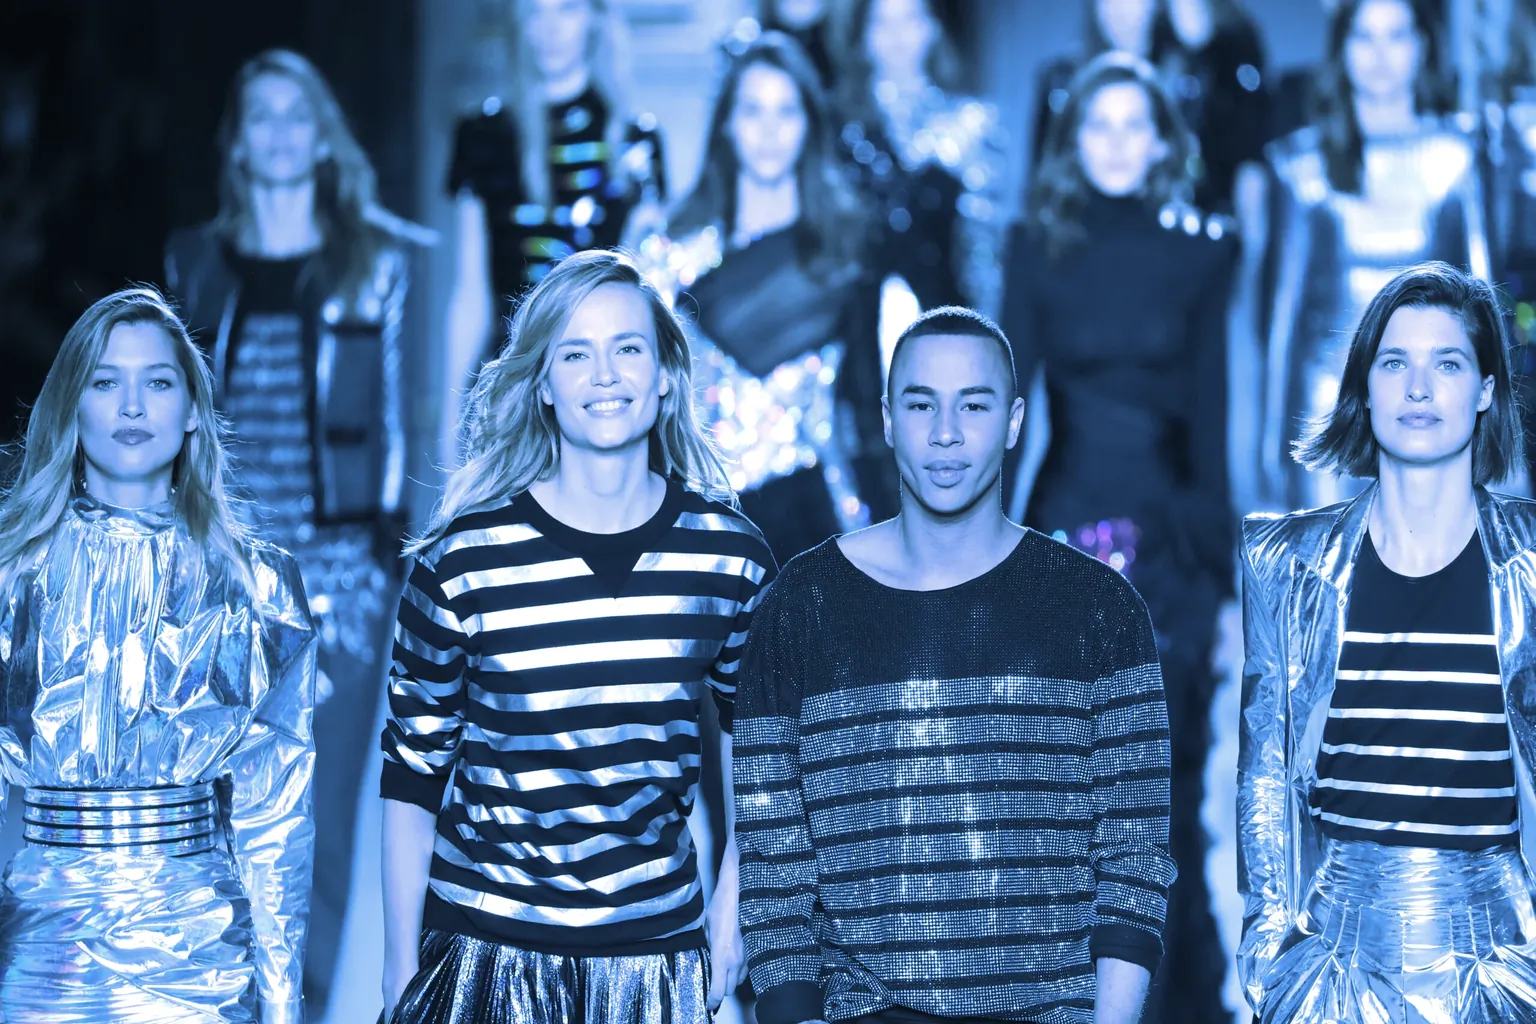 Models in Balmain apparel. Image: Shutterstock